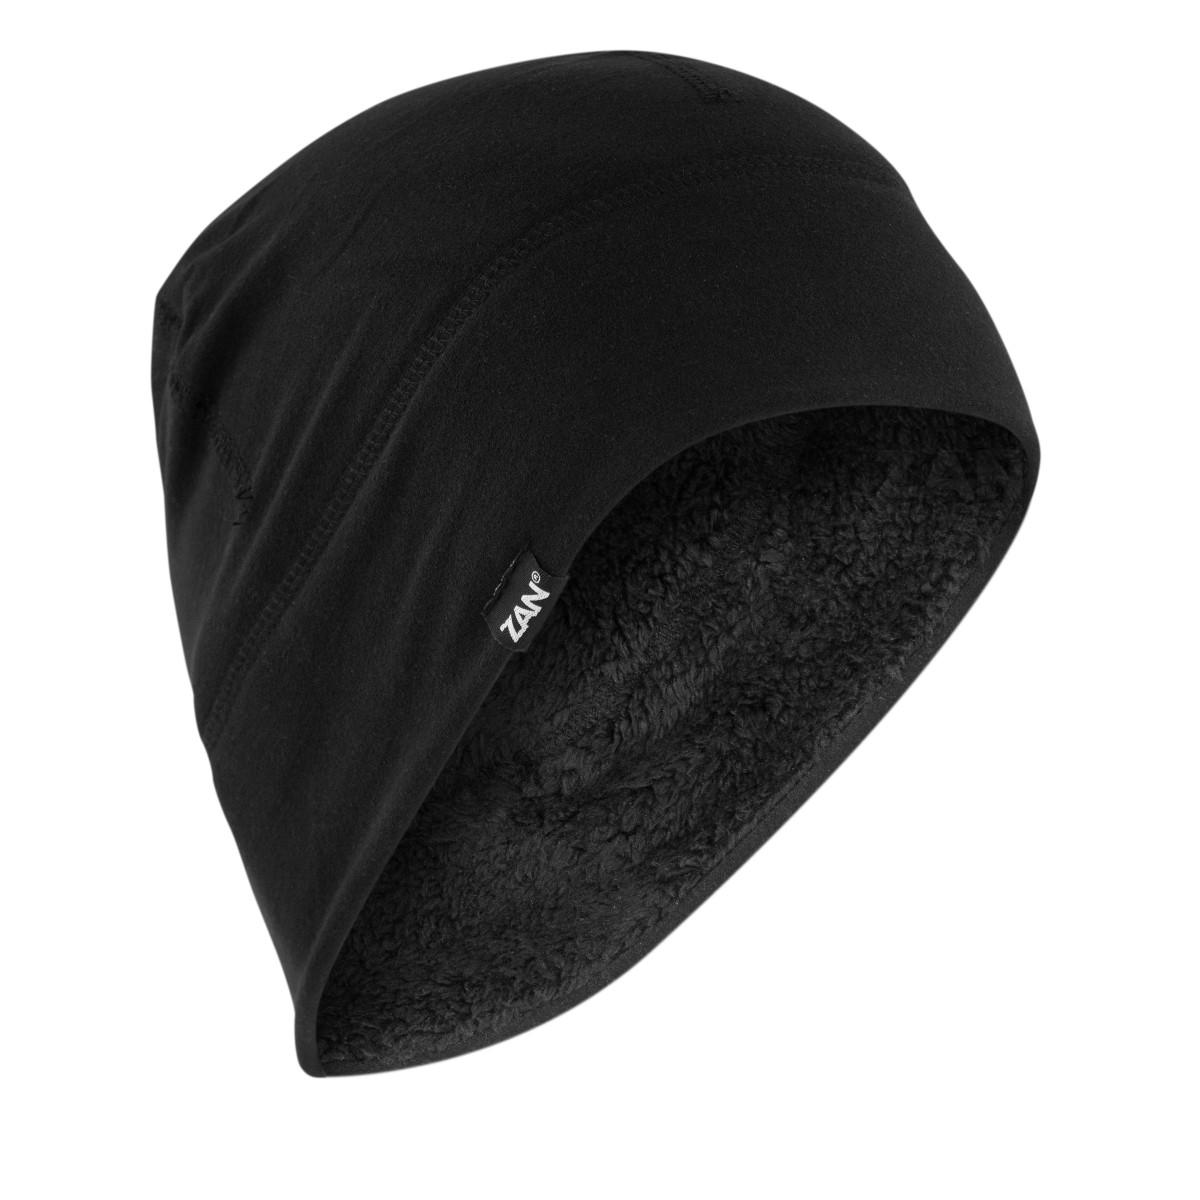 Zan Headgear Helmet Liner/Beanie SportFlex® Series Fleece Lined Black WHLH114 - Beanies